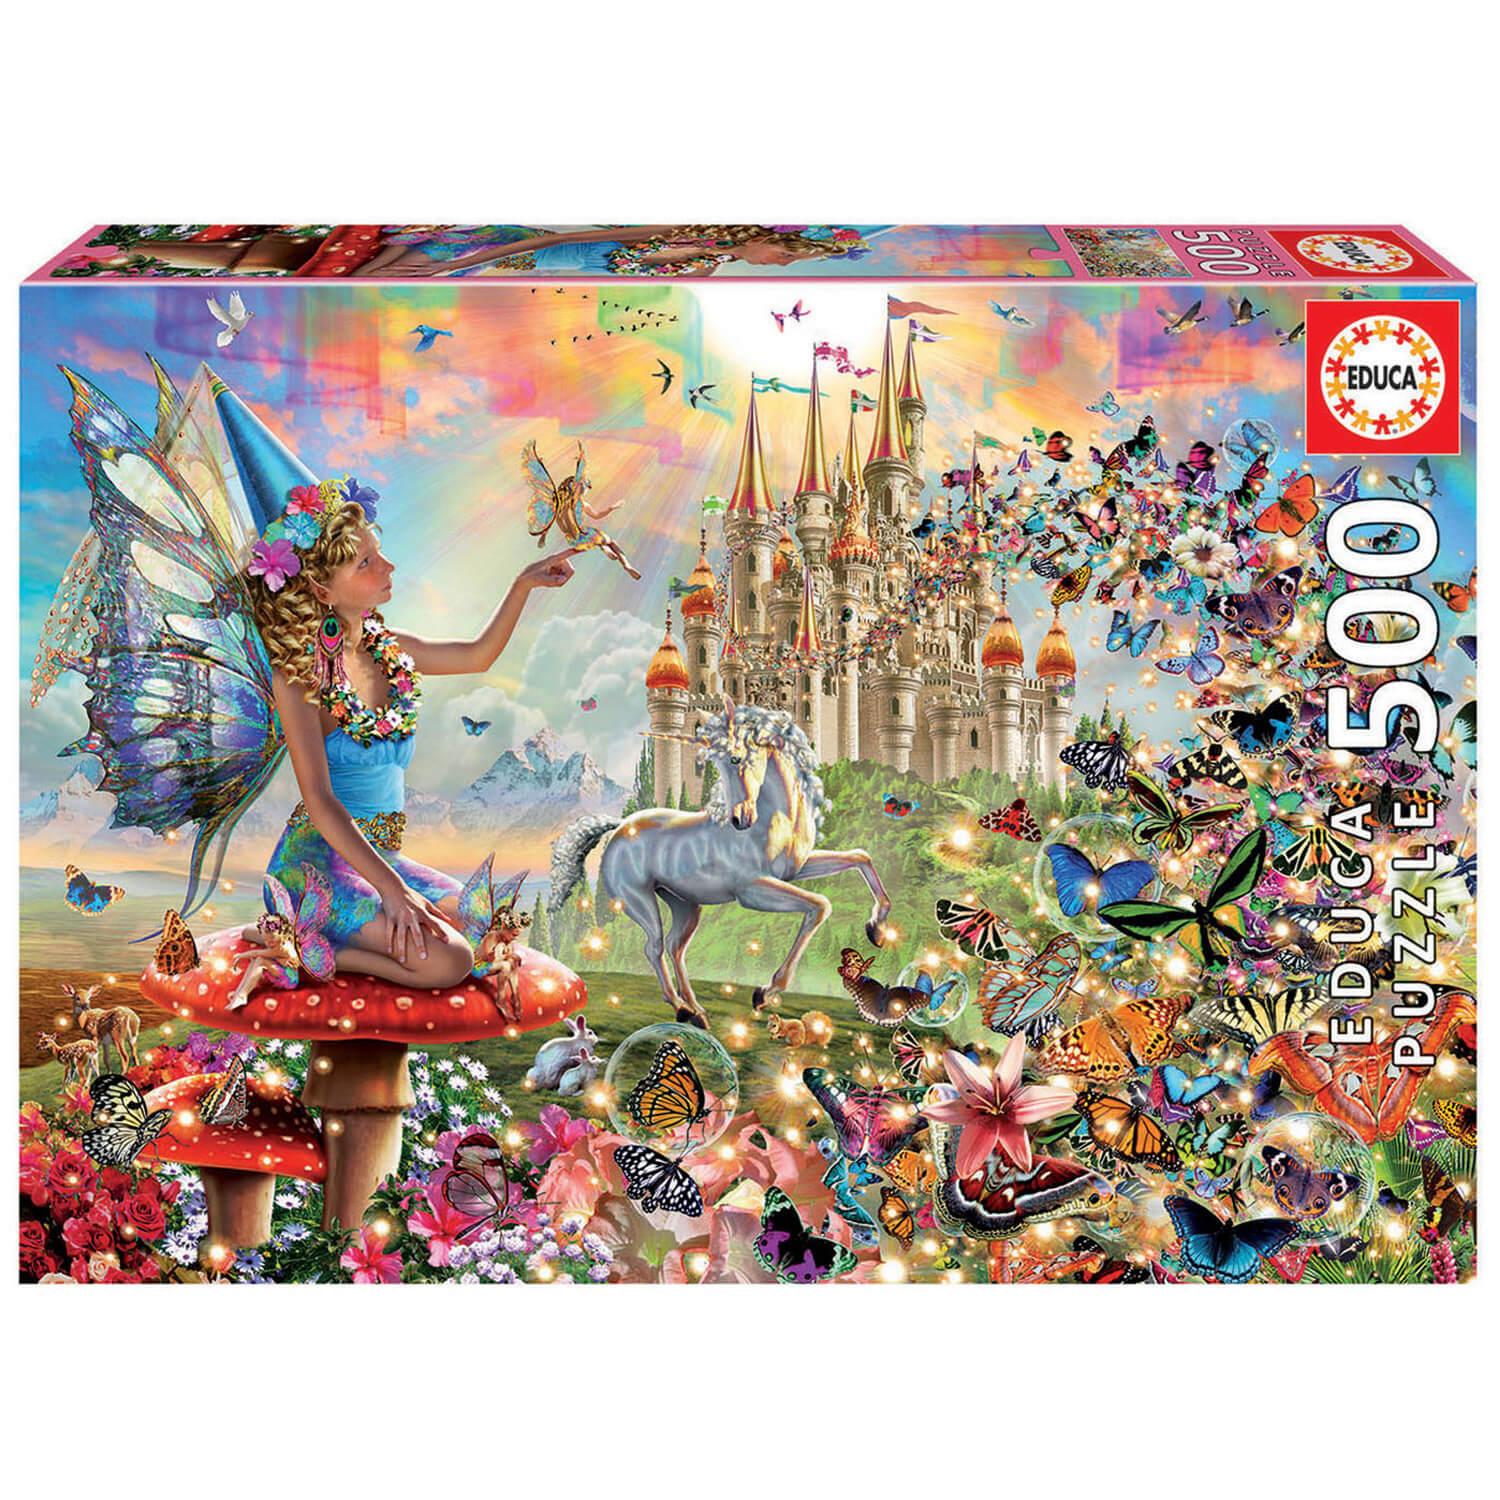 Puzzle 500 pièces : Fantasia - Educa - Rue des Puzzles